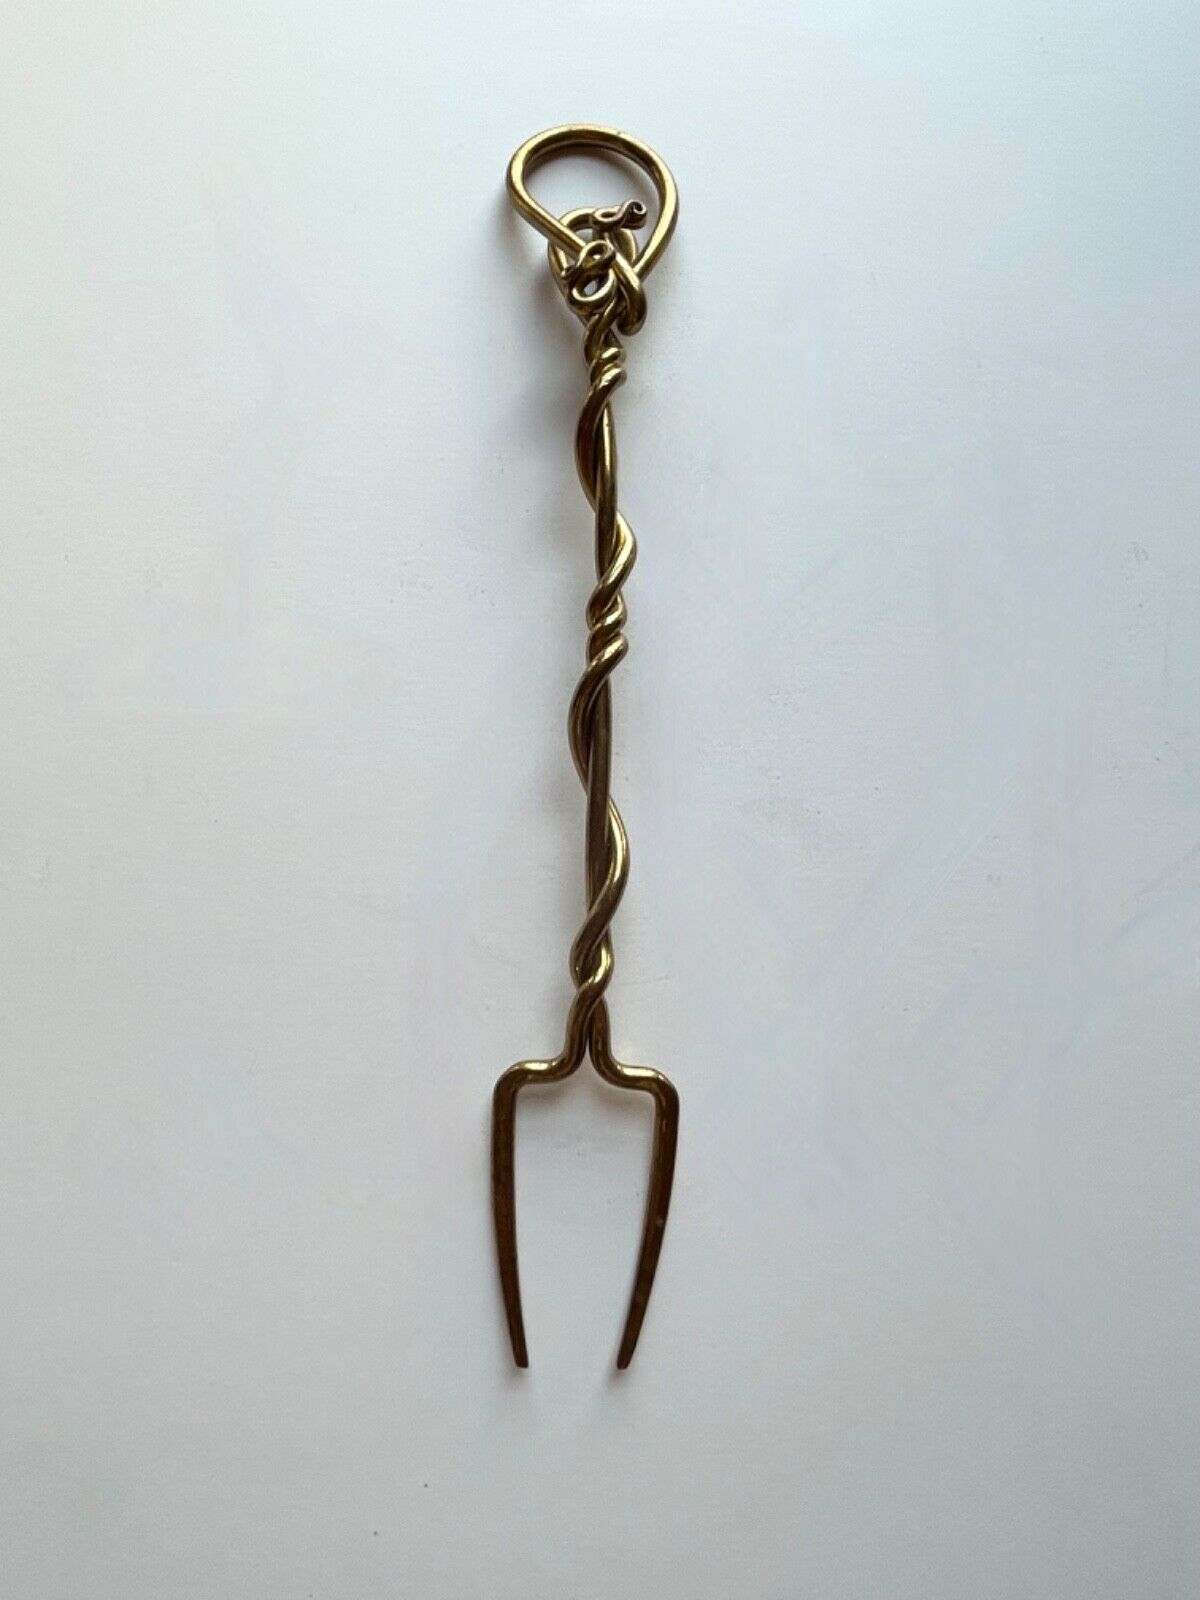 Joe Spoon Brass Serving Fork 1995 Hand Wrought Hammered Signed Vintage